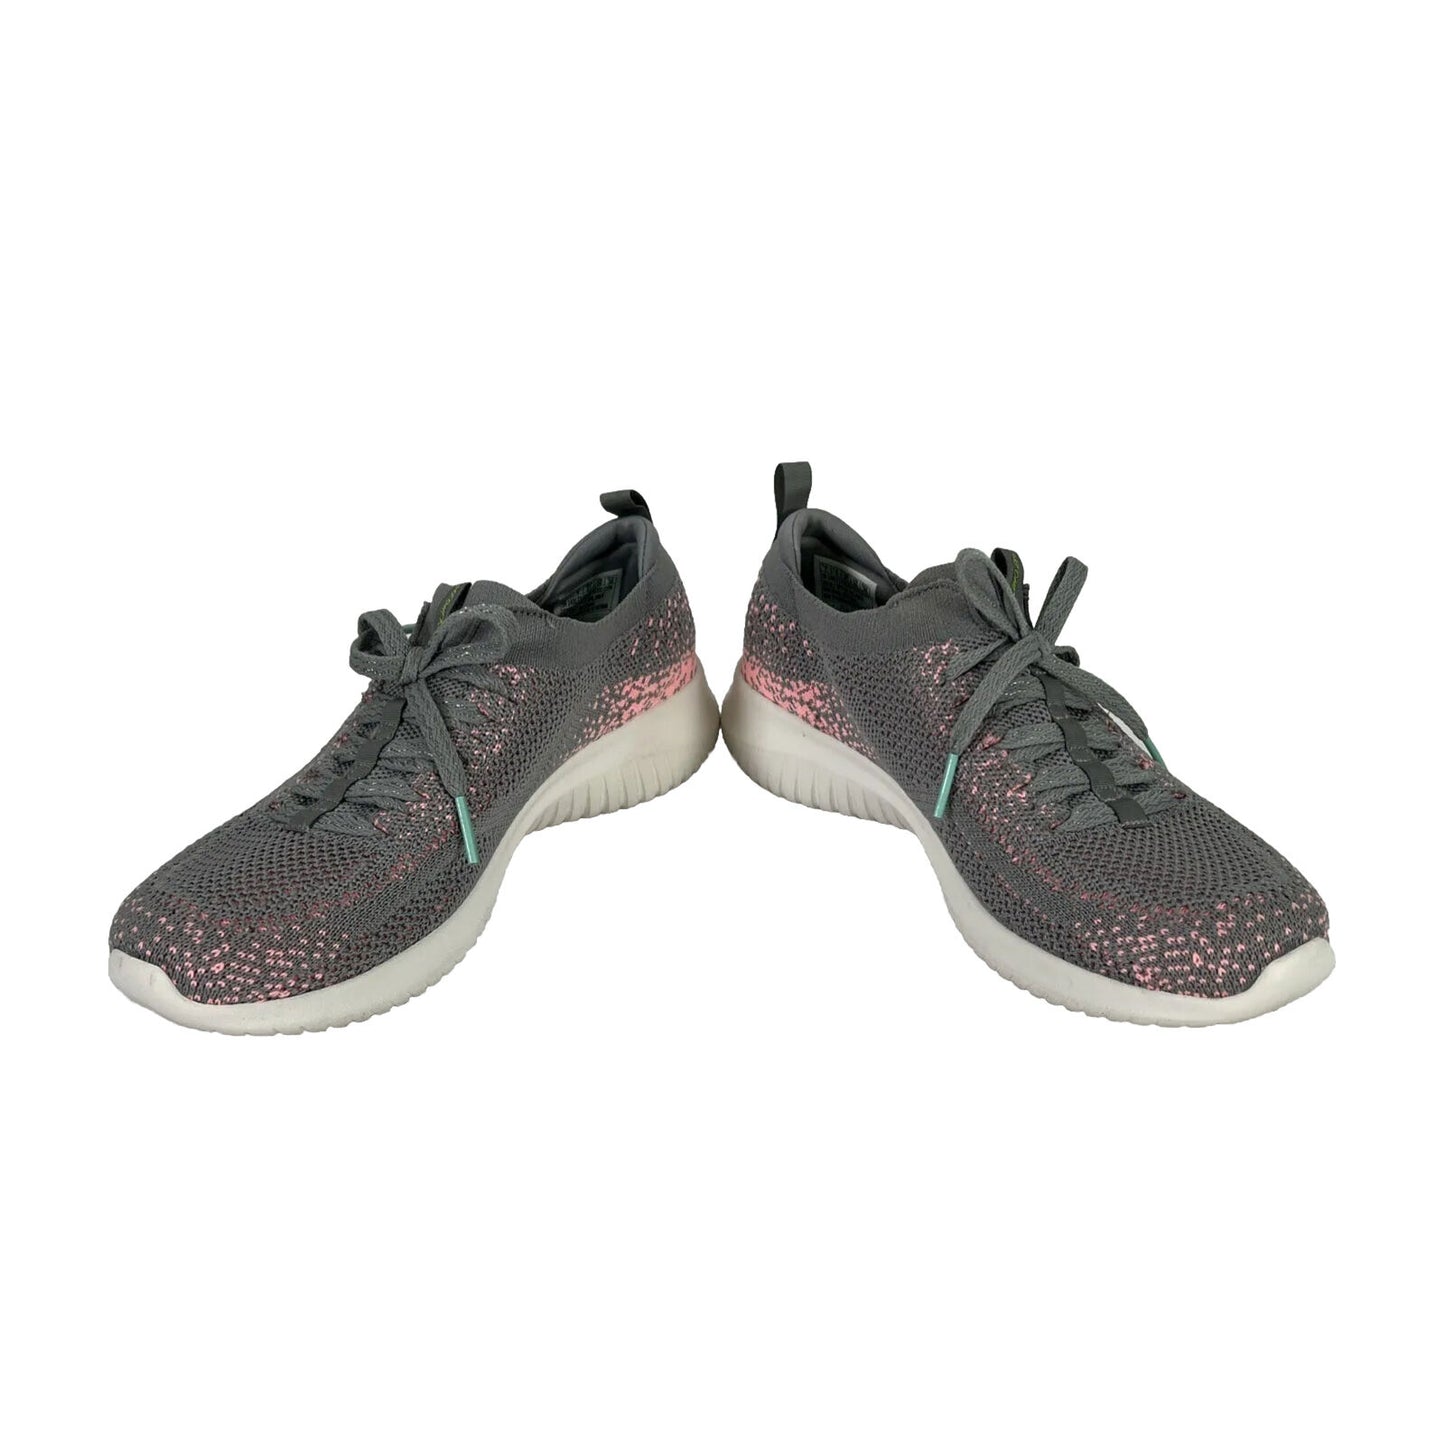 Skechers Women's Gray/Pink Ultra Flex Twilight Lace Up Running Shoes - 7